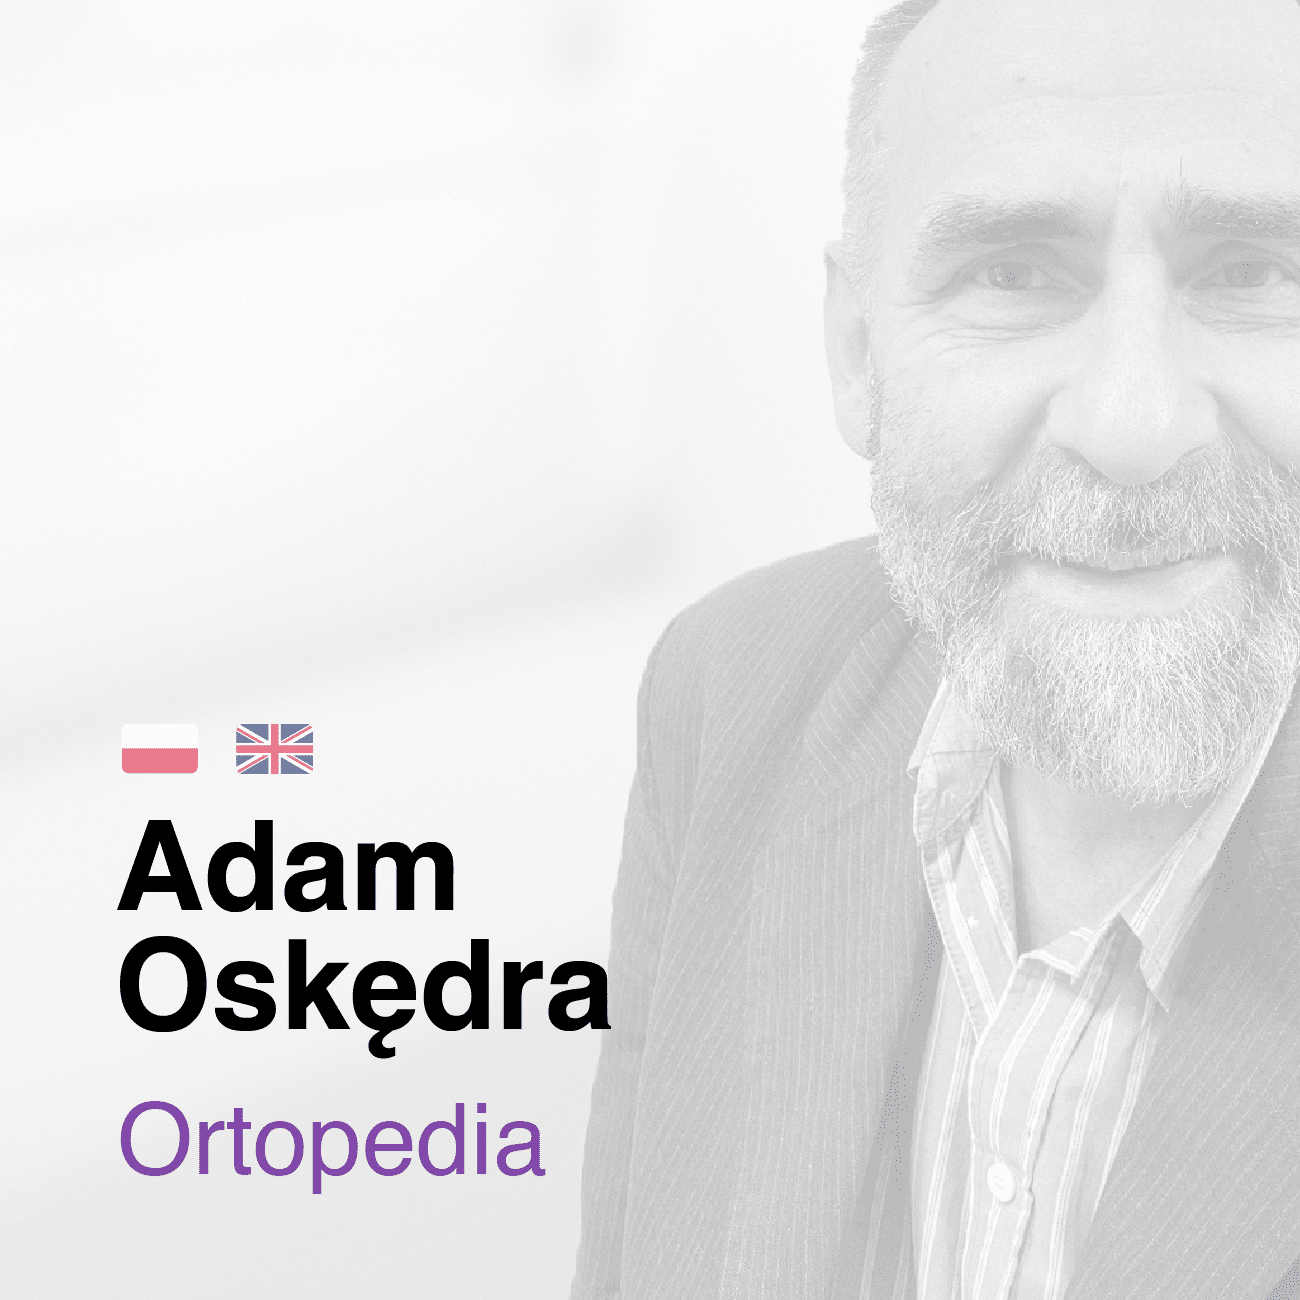 Adam Oskędra Ortopedia, Medicana Marihuana Lecznicza recepta